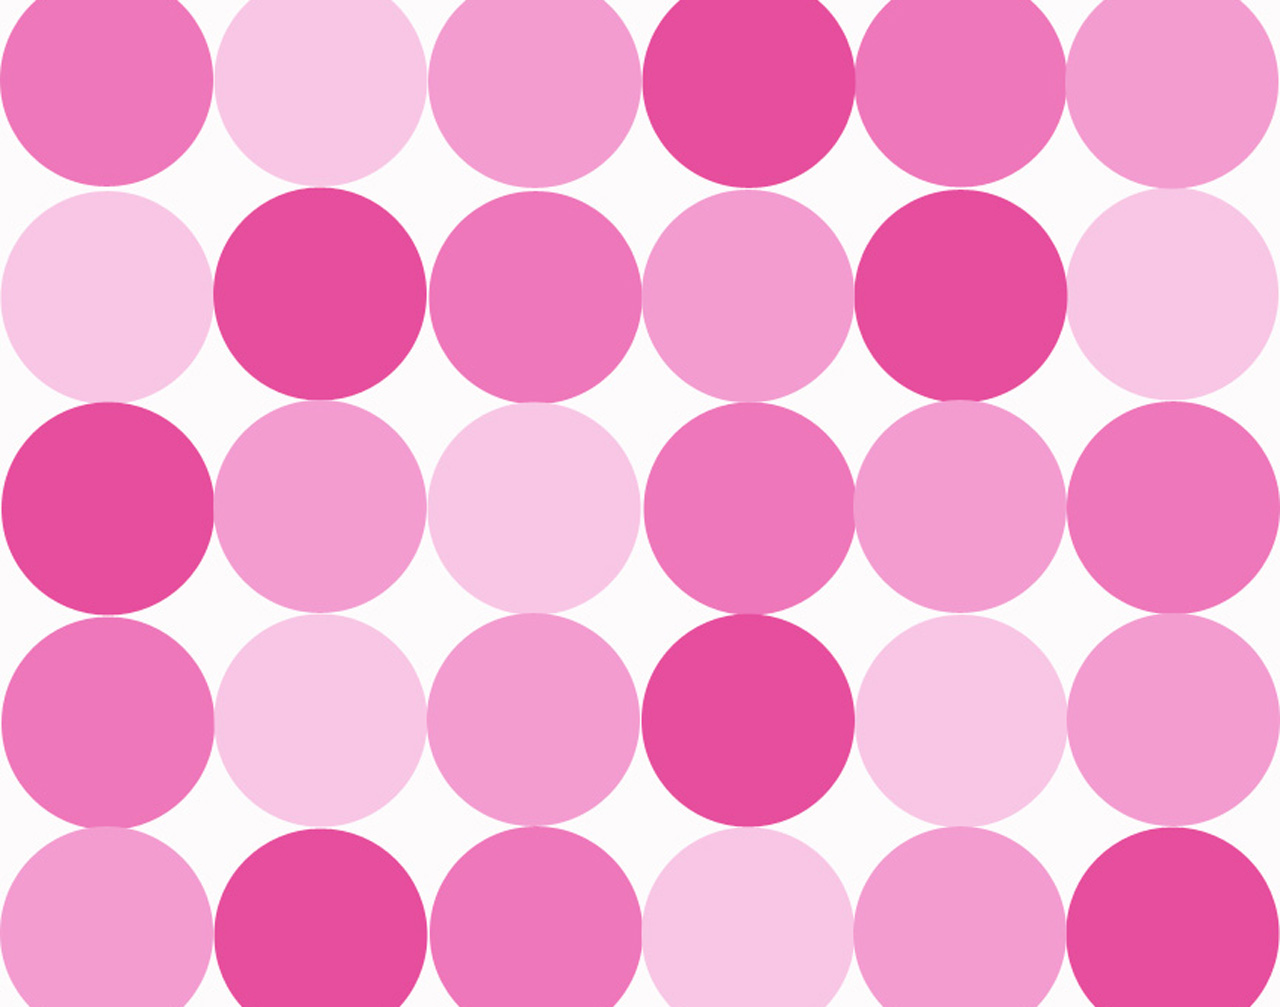 Pink and White Polka Dot Quality